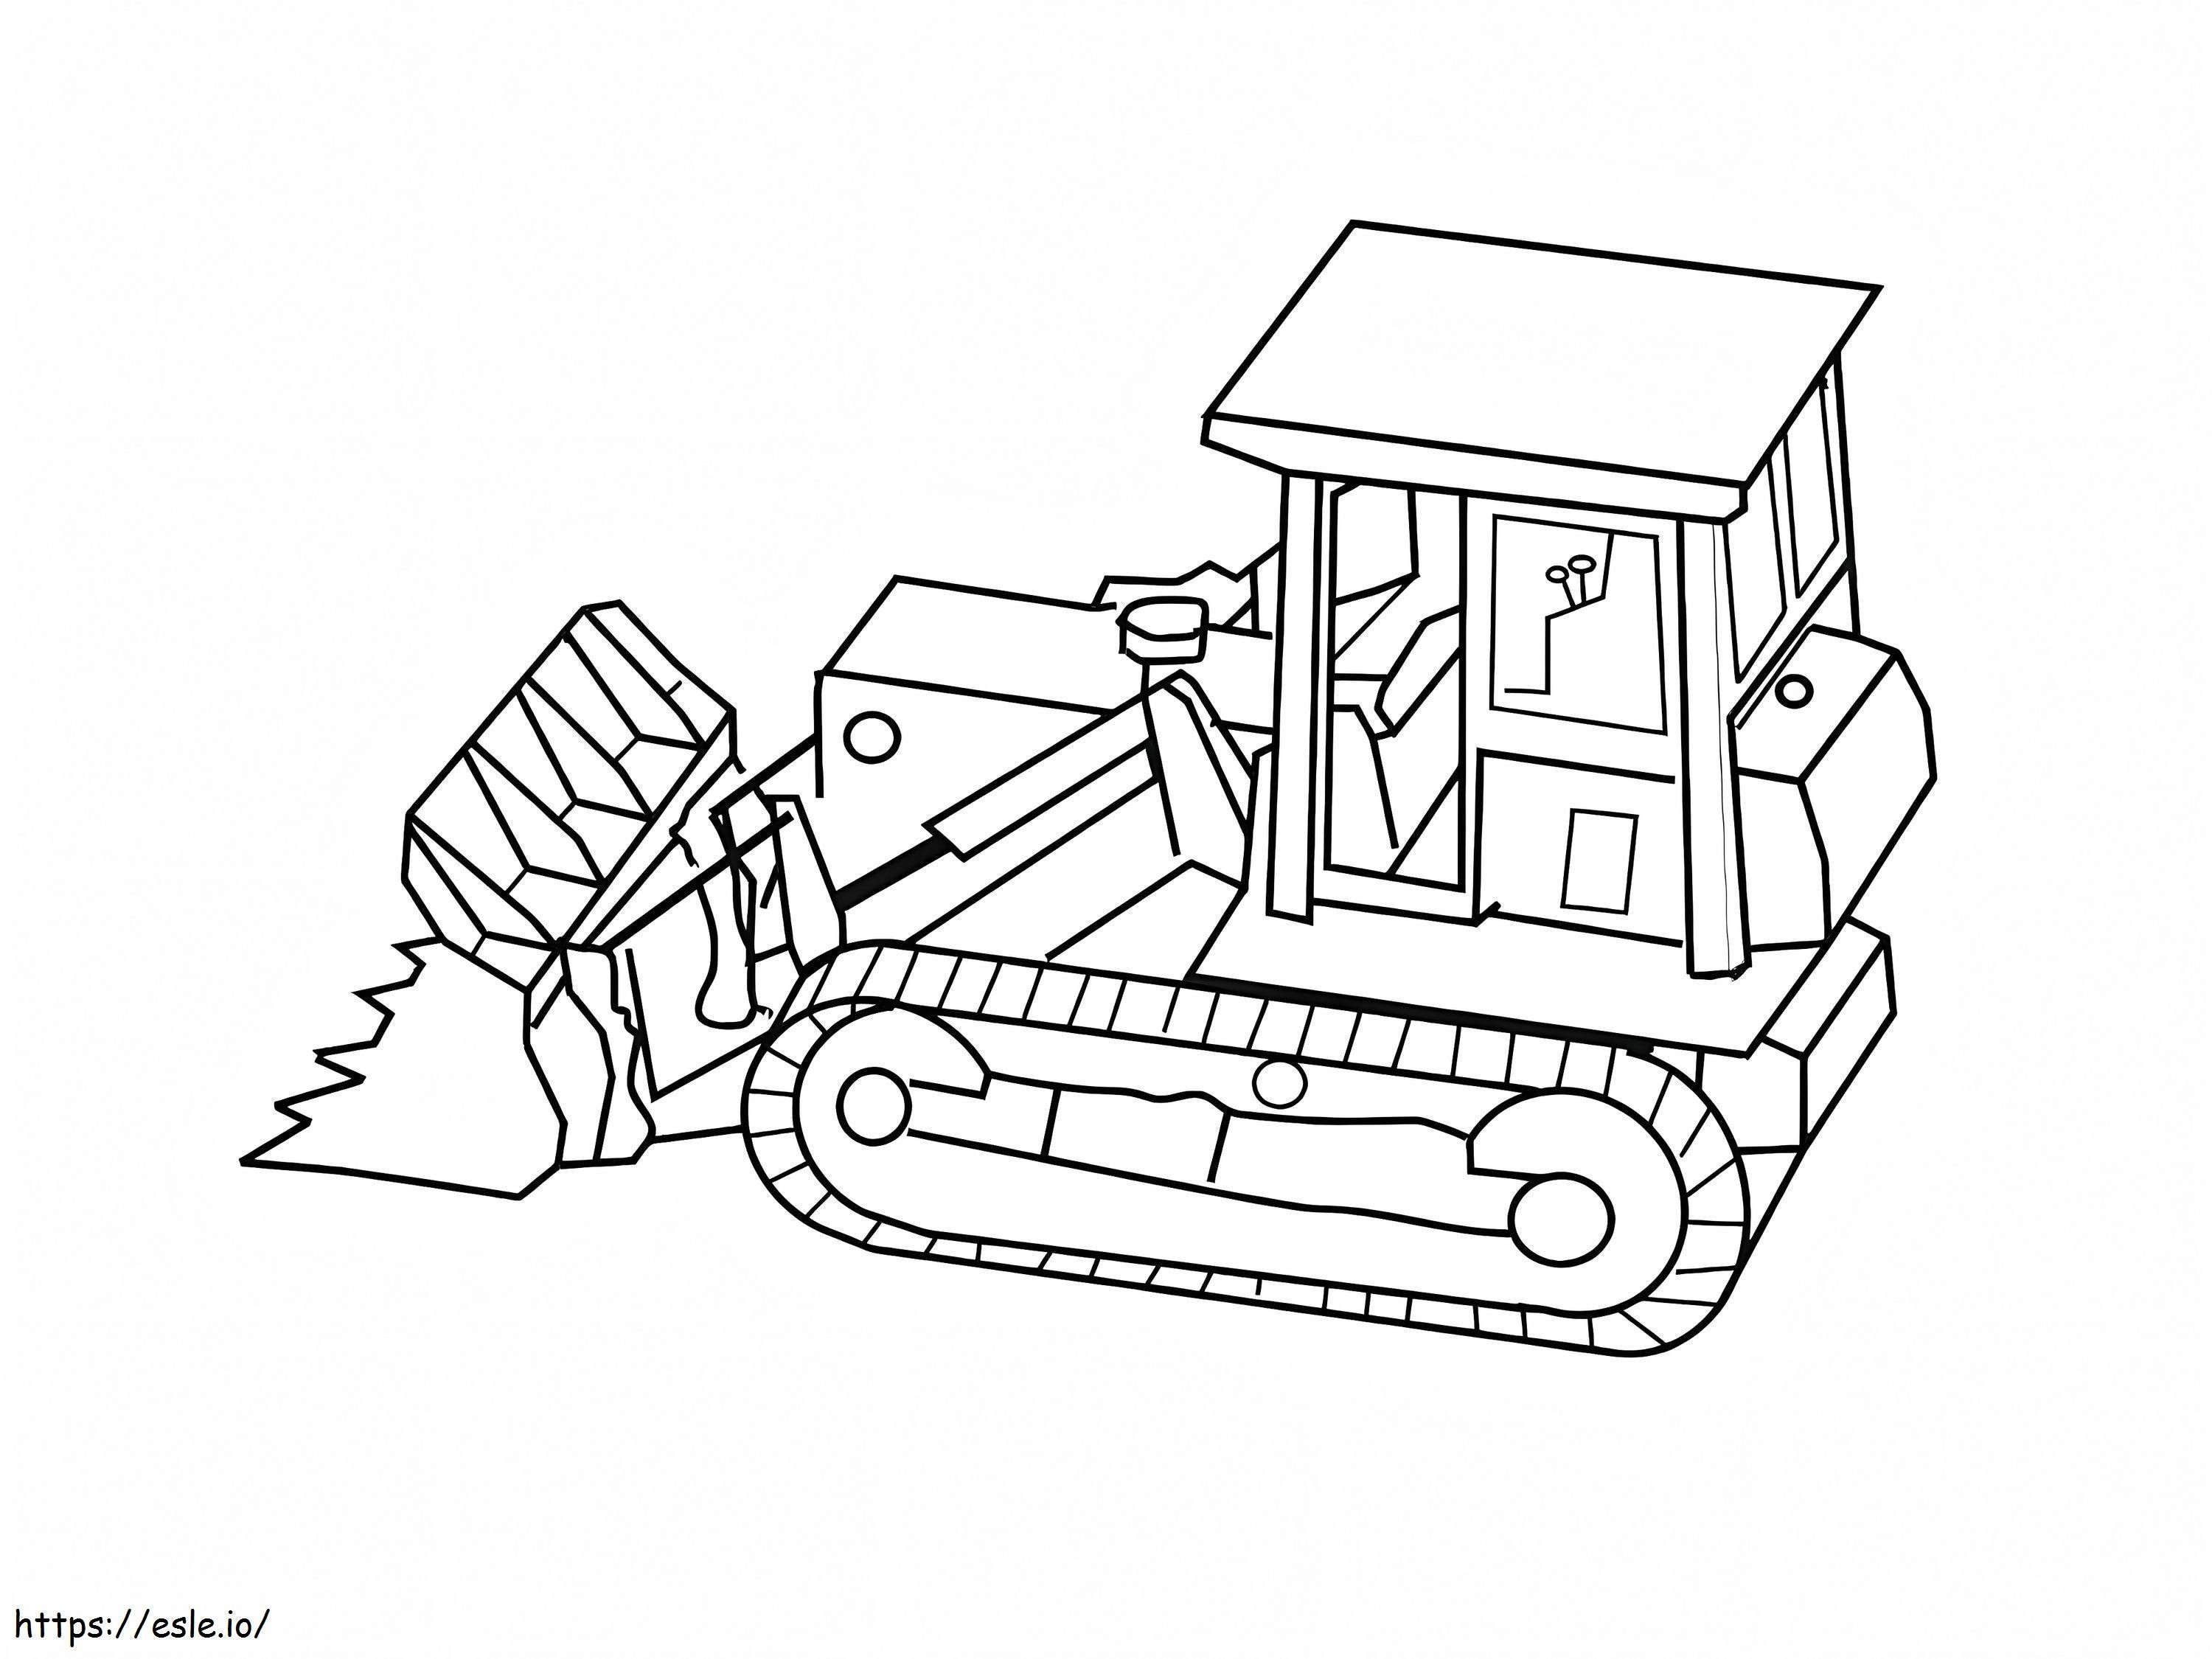 Bulldozer 2 coloring page